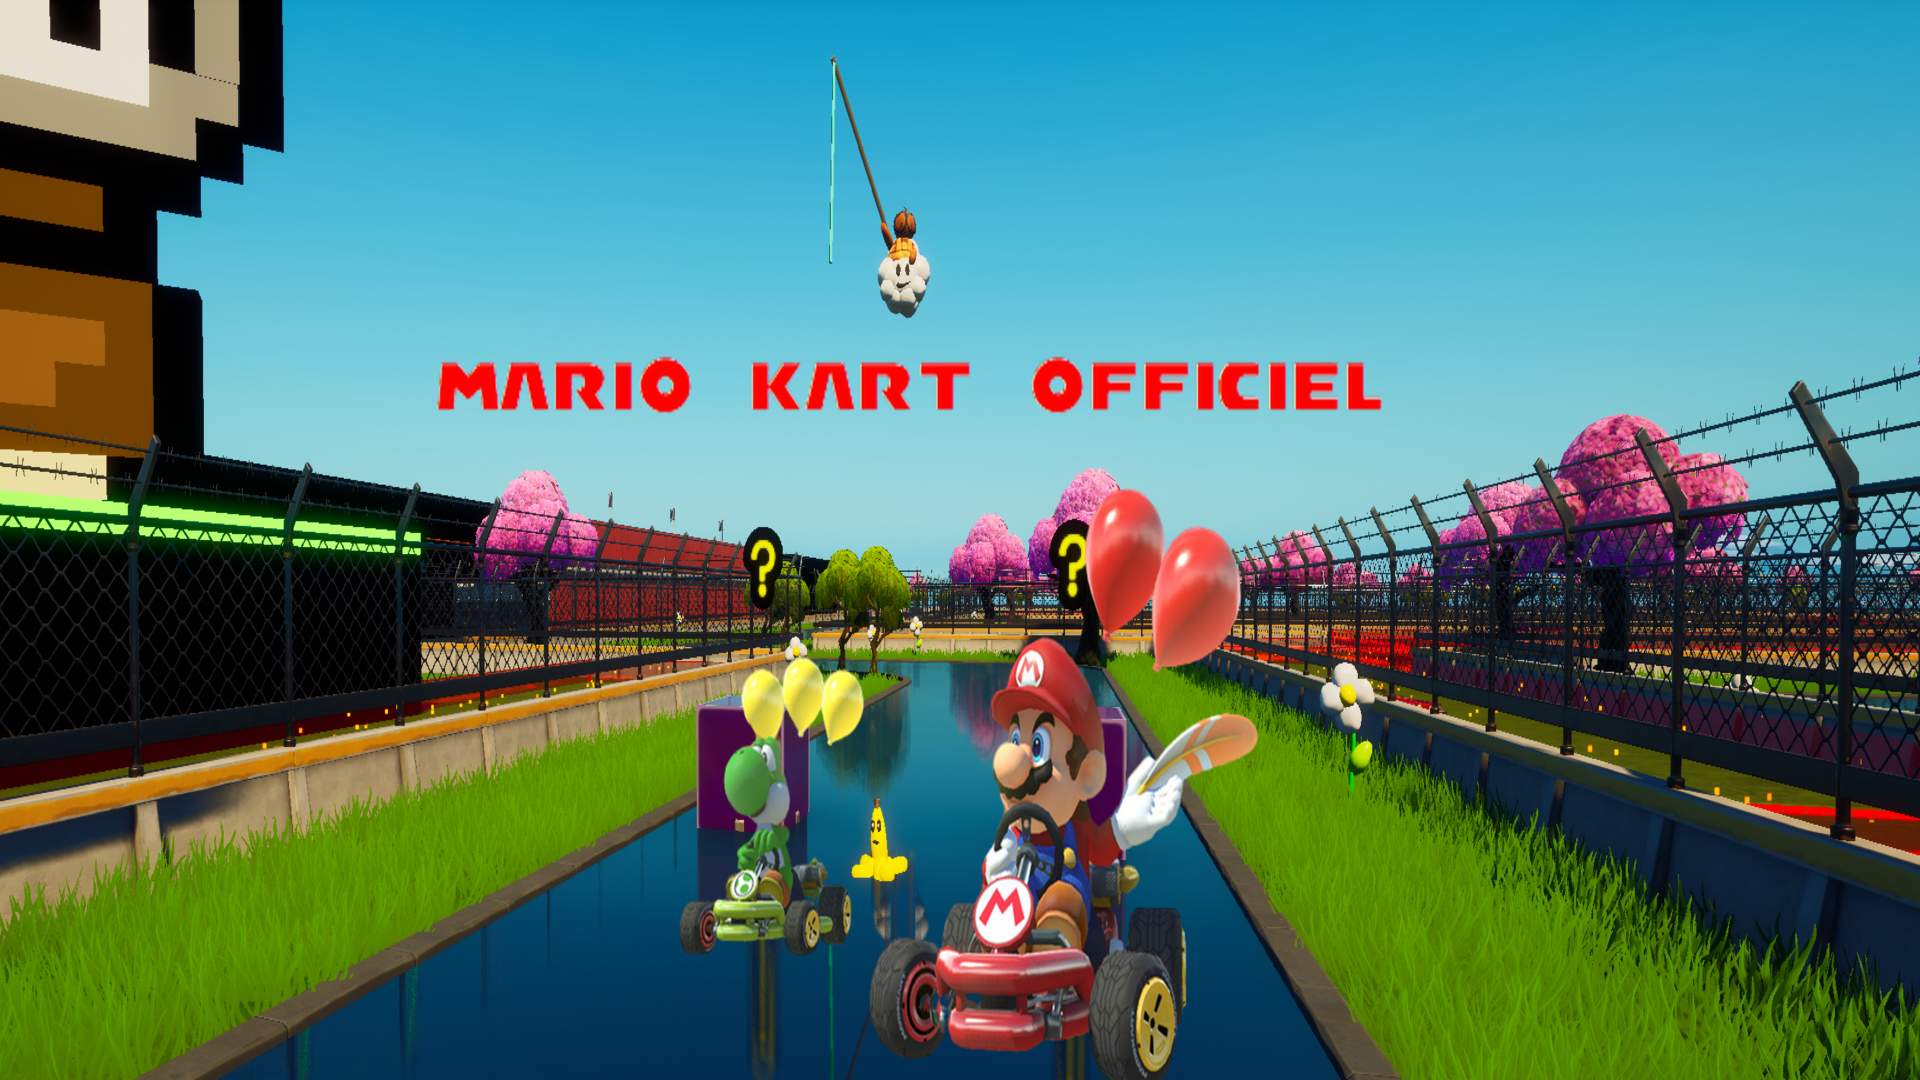 Mario Kart Officiel (M)